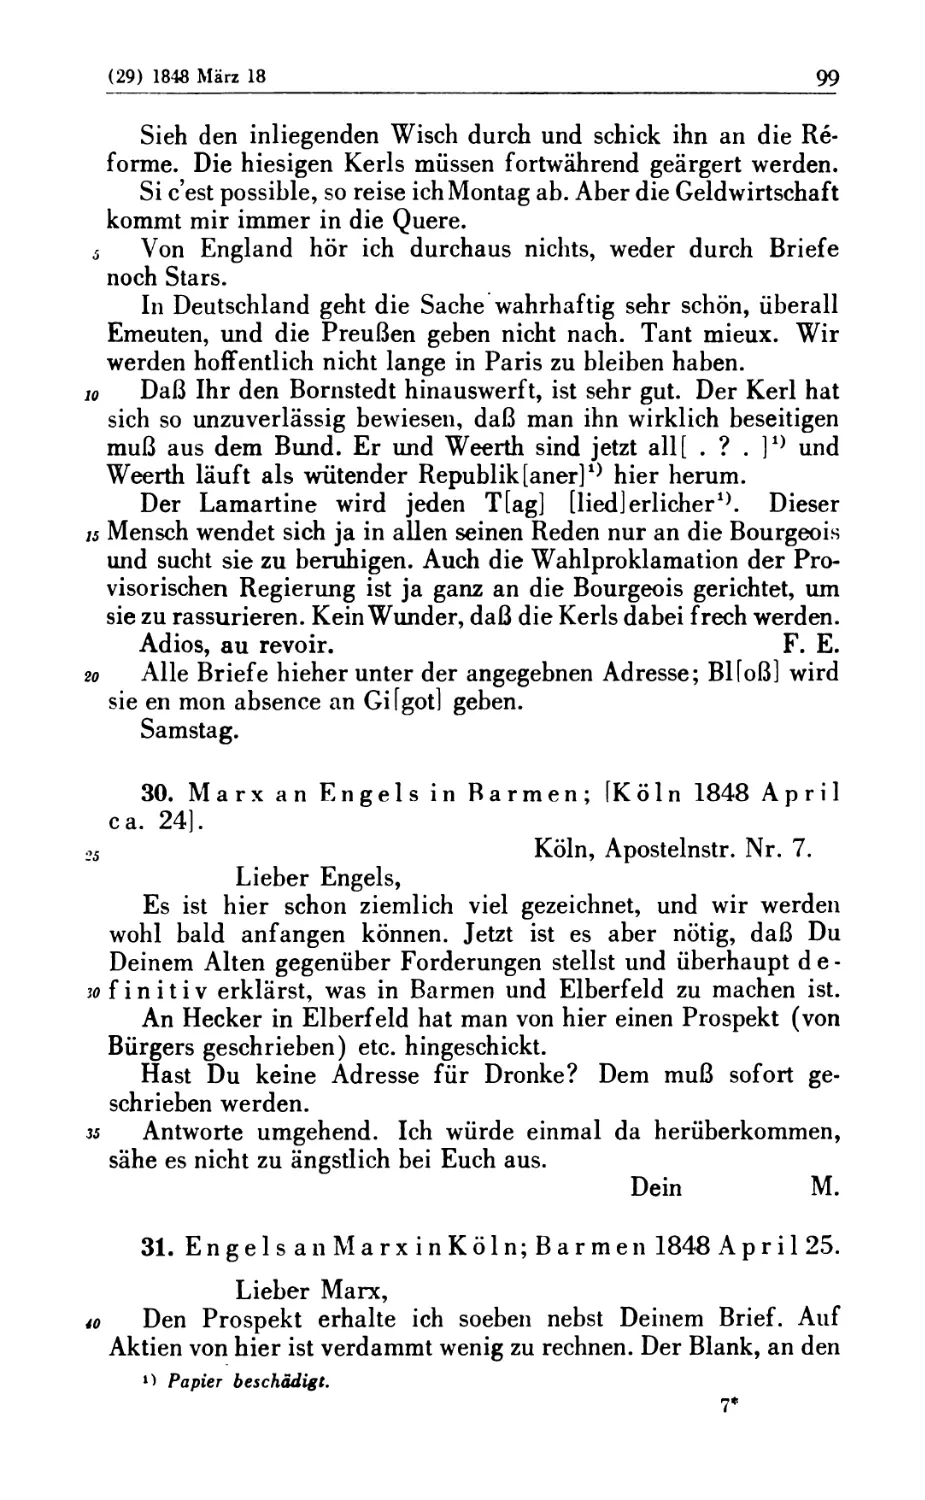 30. Marx an Engels in Barmen ; [Köln 1848 April ca. 24]
31. Engels an Marx in Köln; Barmen 1848 April 25